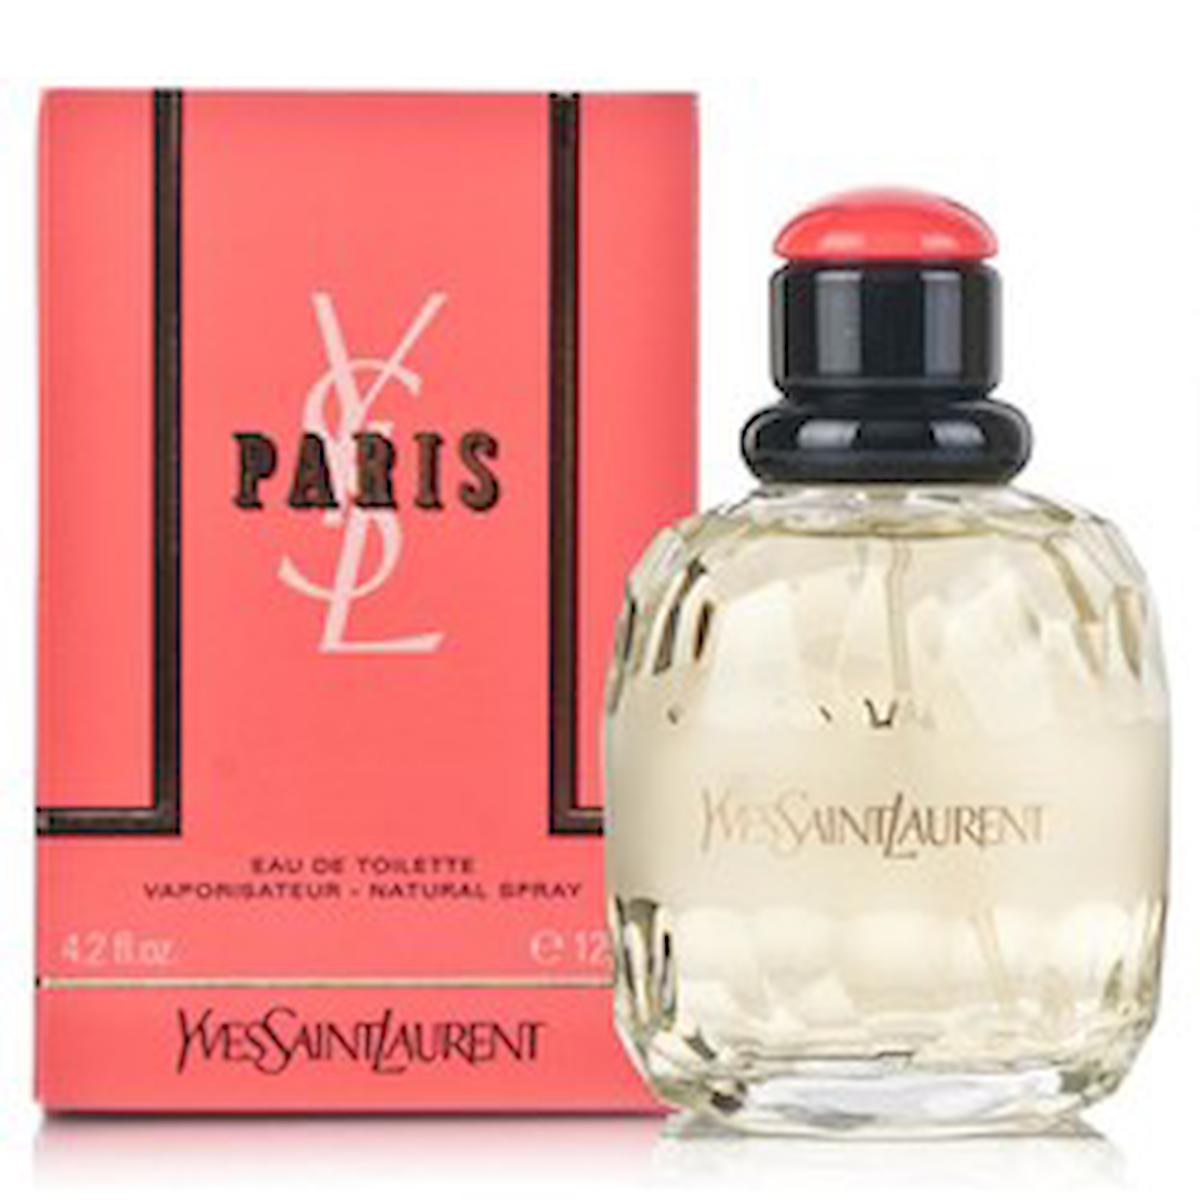 Yves Saint Laurent Paris EDT Portakal-Çiçeksi Kadın Parfüm 125 ml